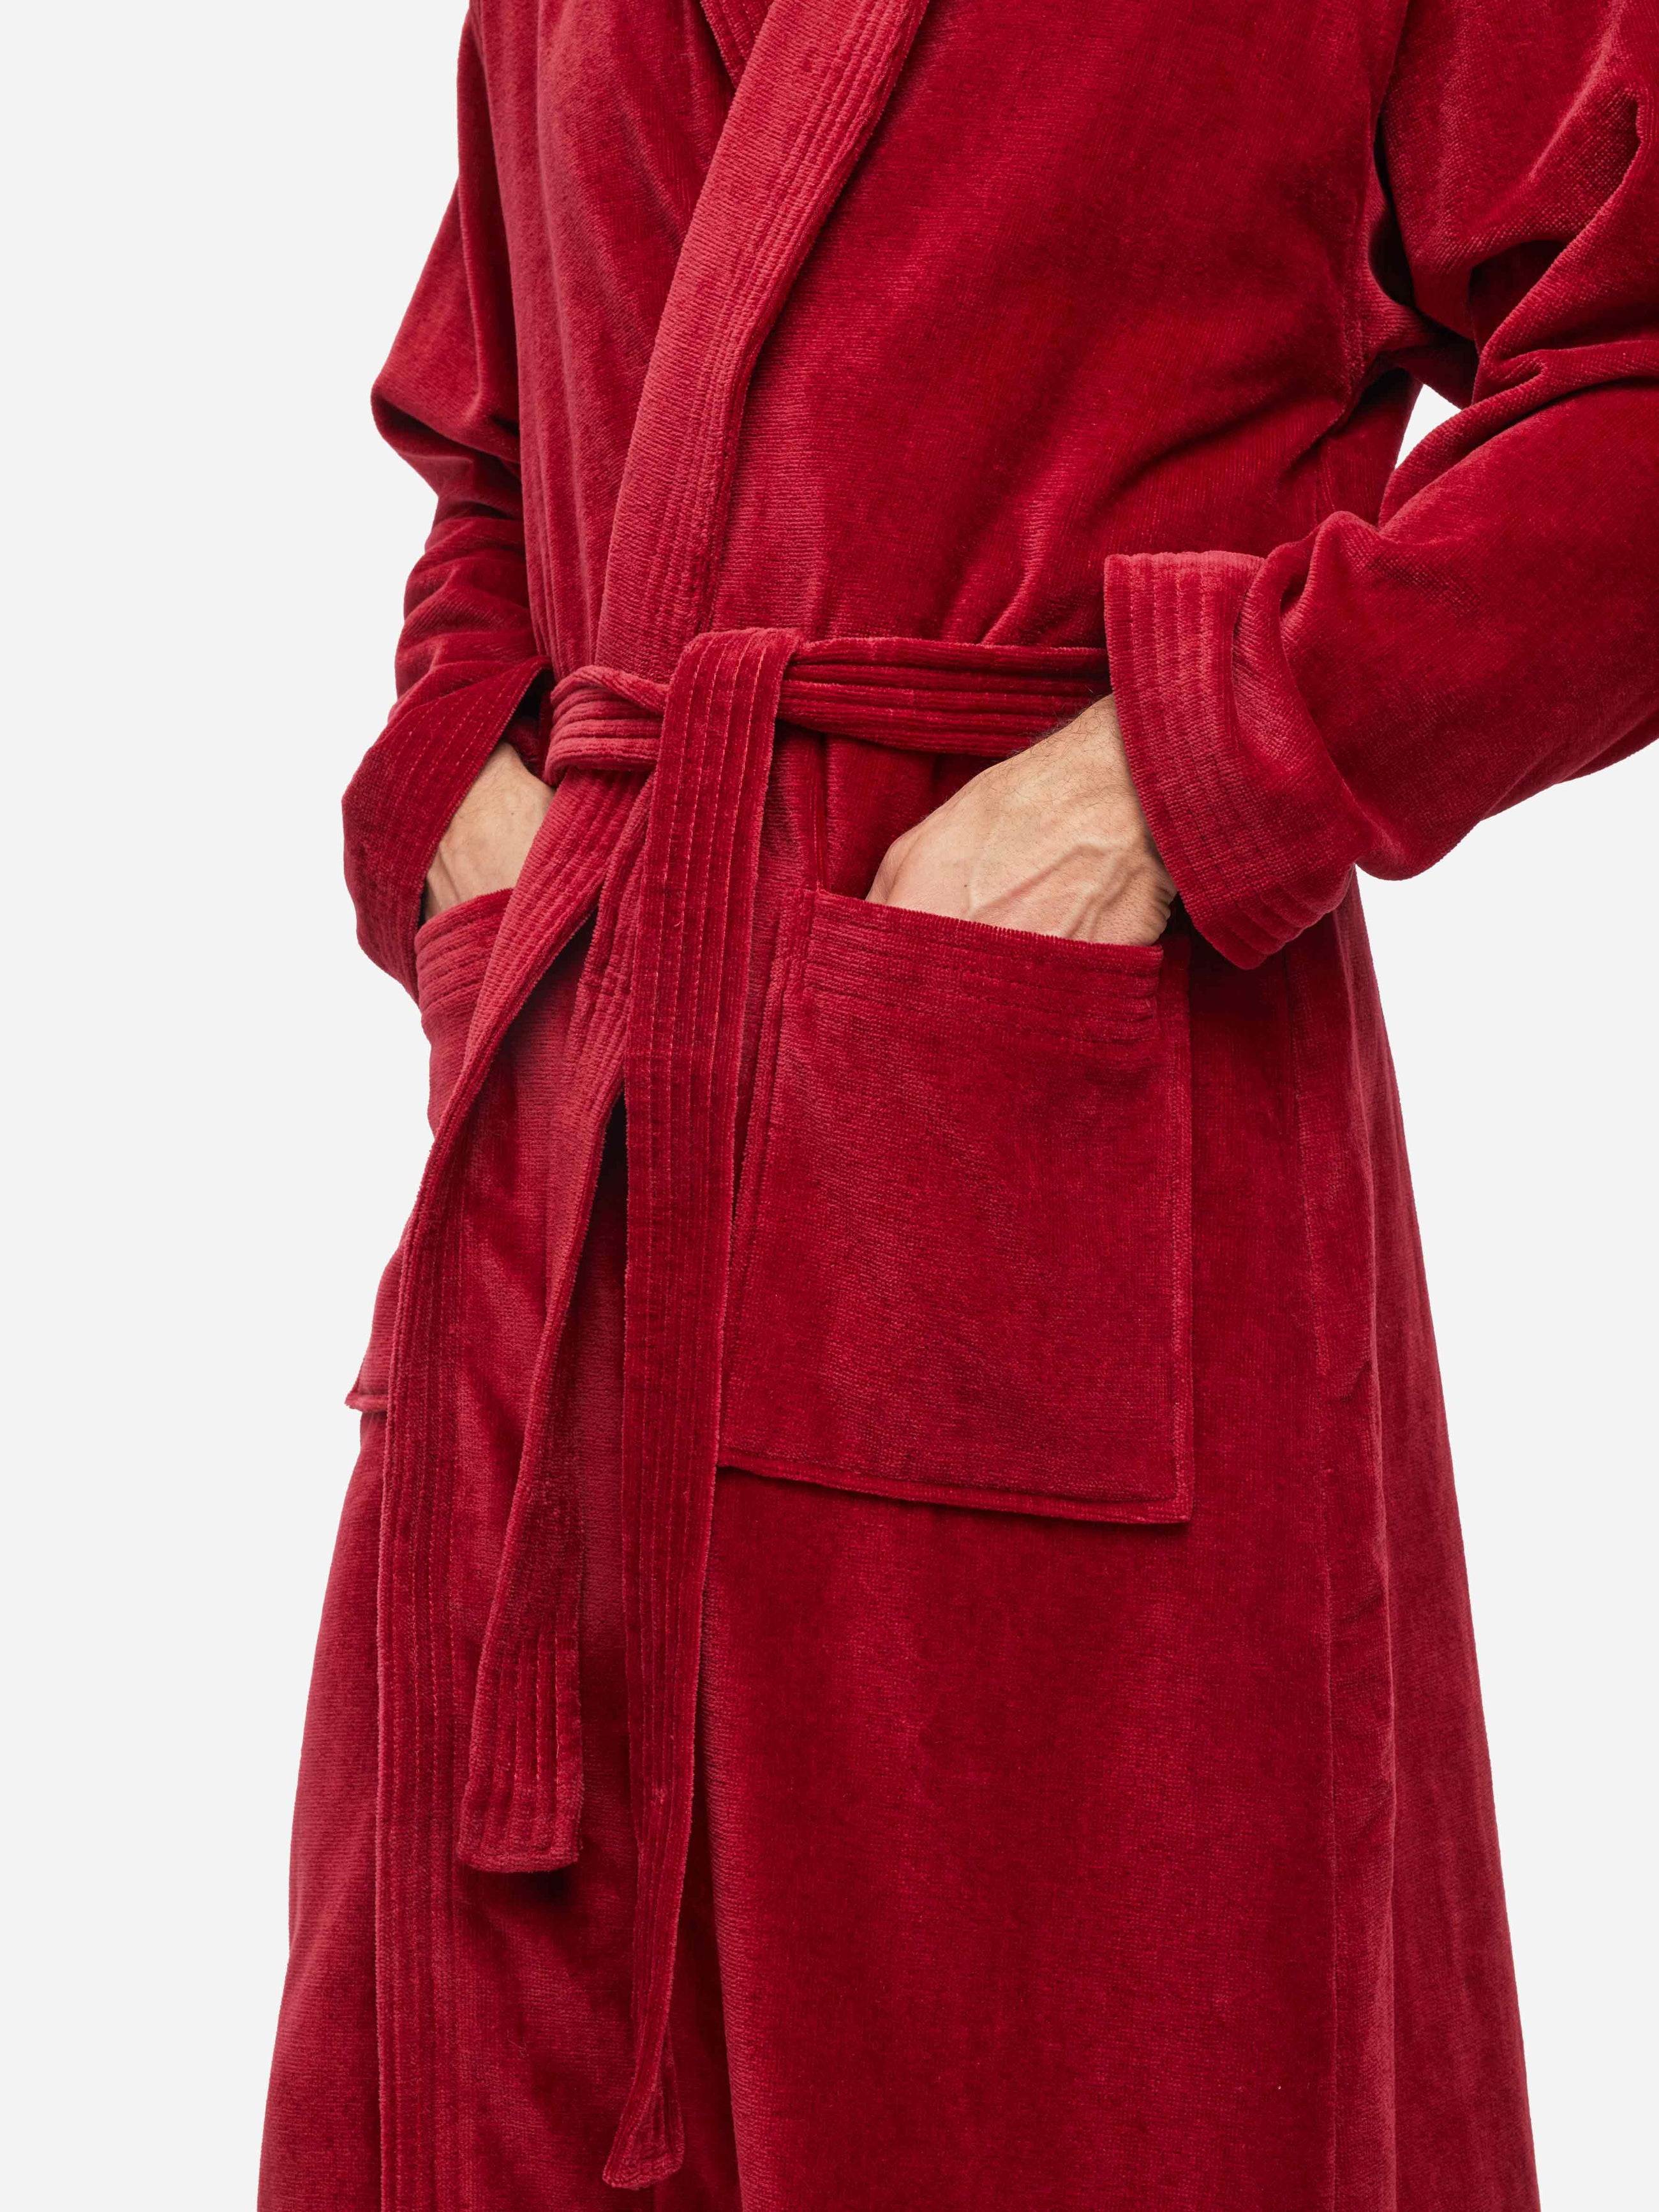 | Robes Men\'s Bathrobes Luxury | Cotton Towelling Rose Velour Men\'s Derek